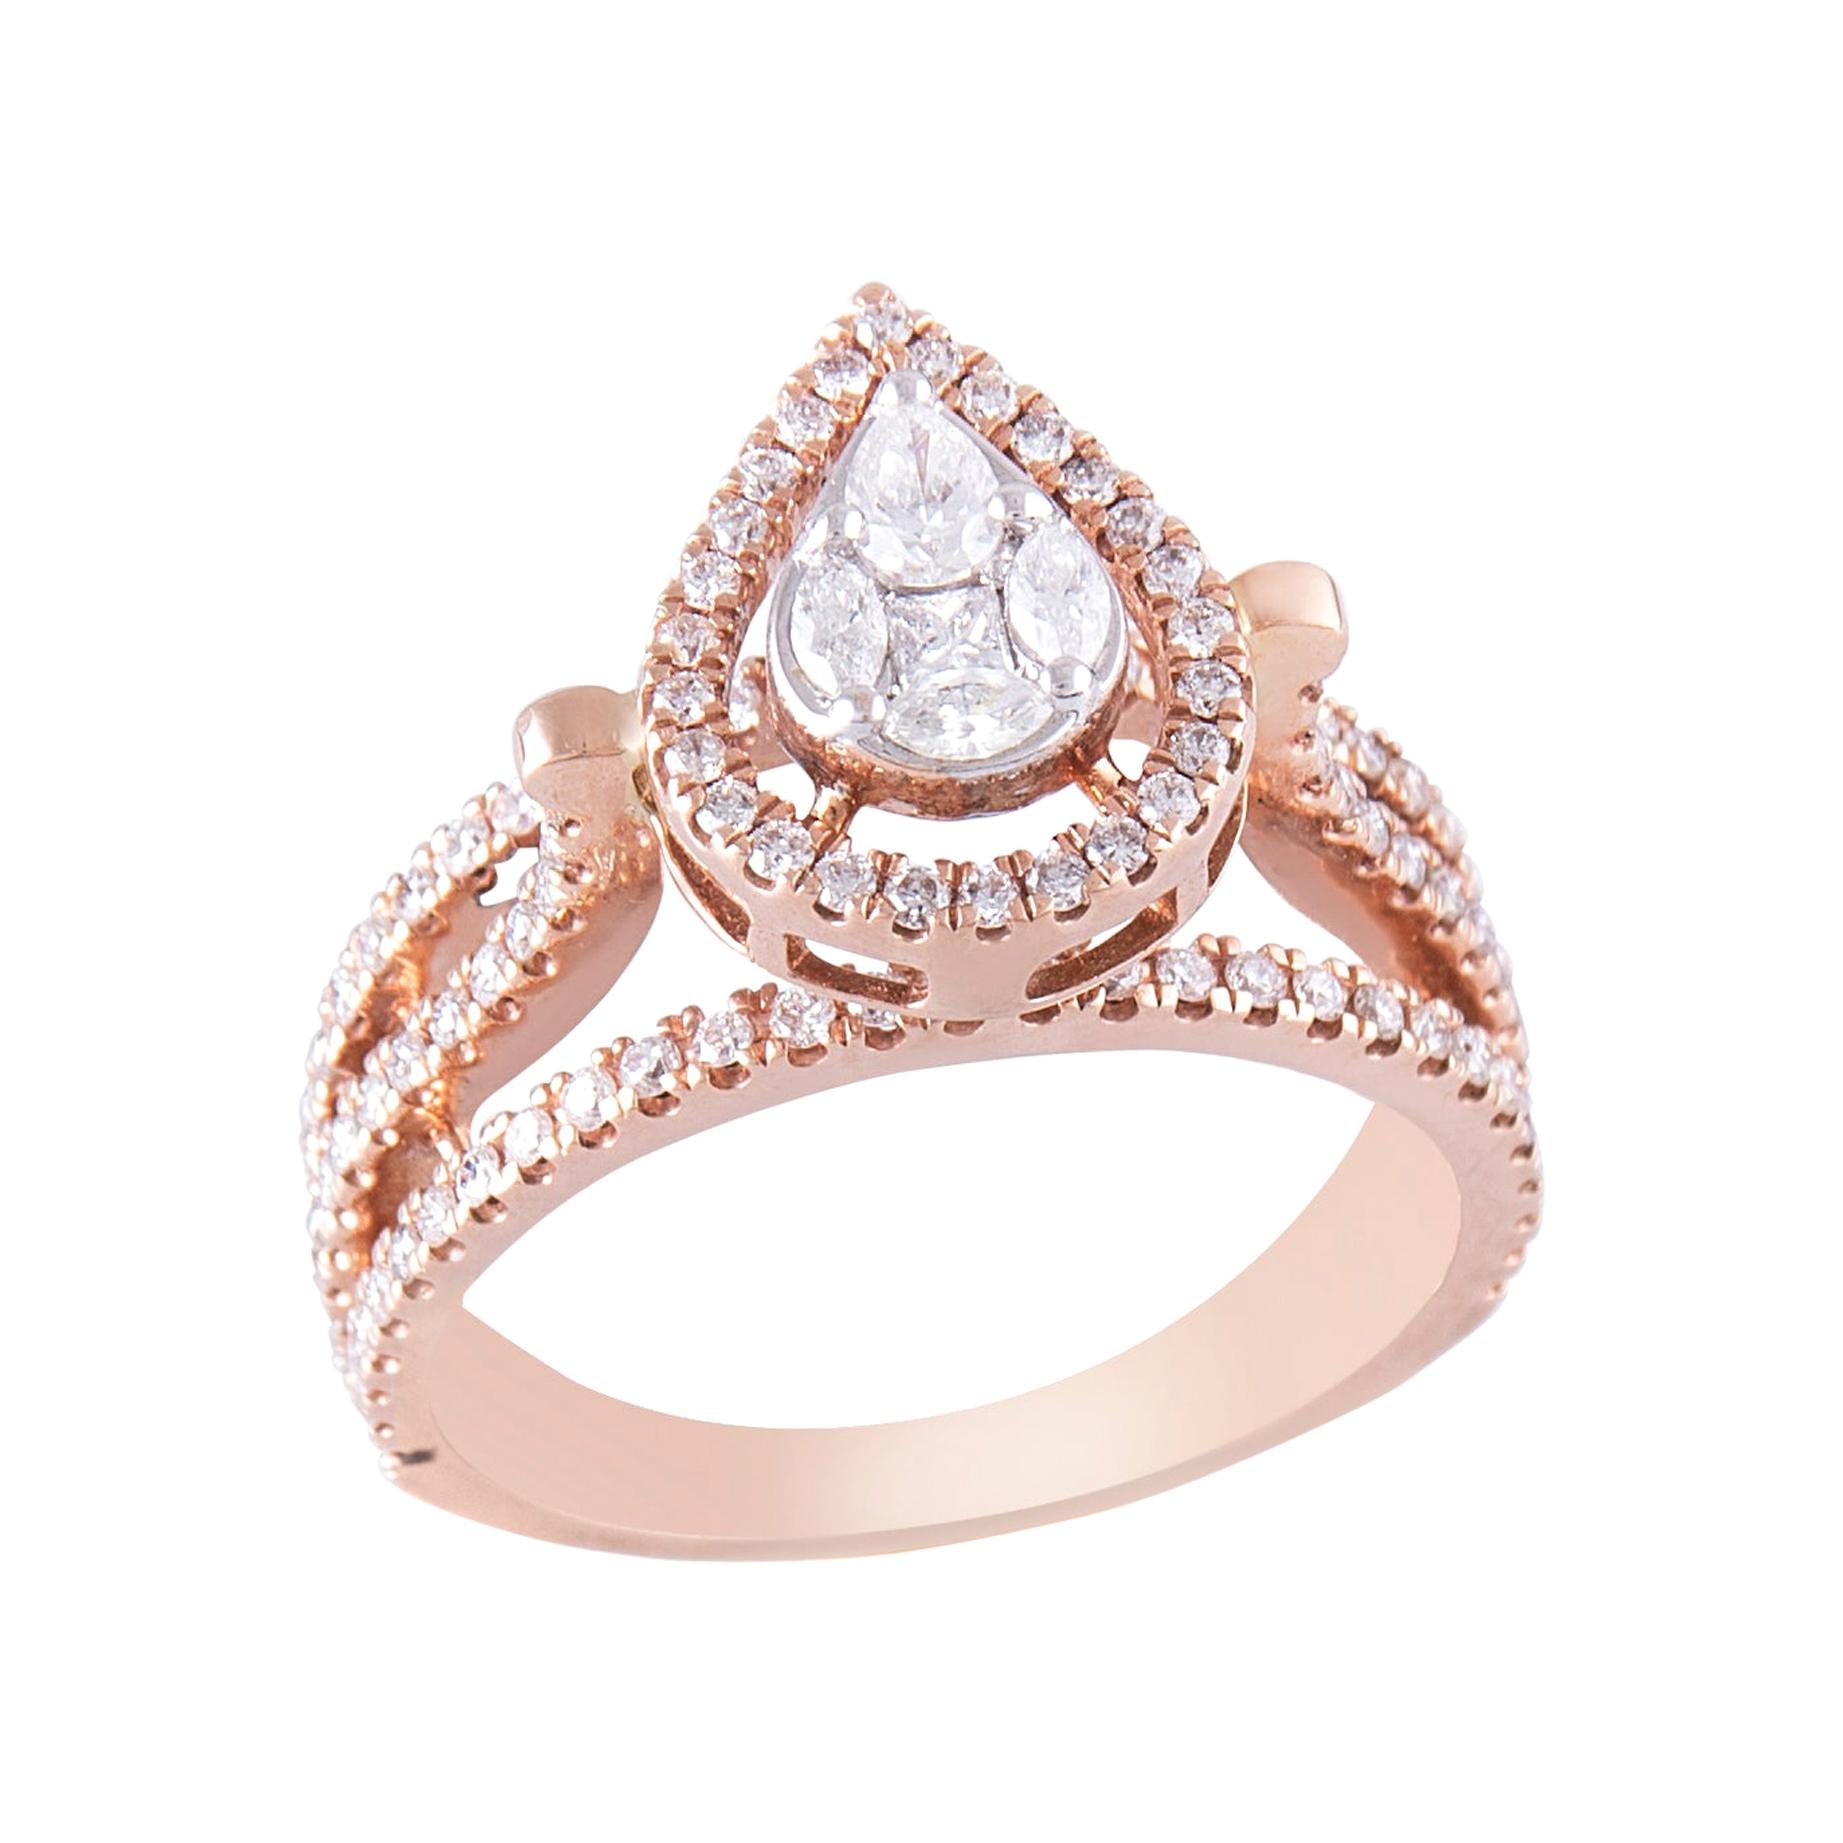 For Sale:  14 Karat Rose Gold White Diamond Ring